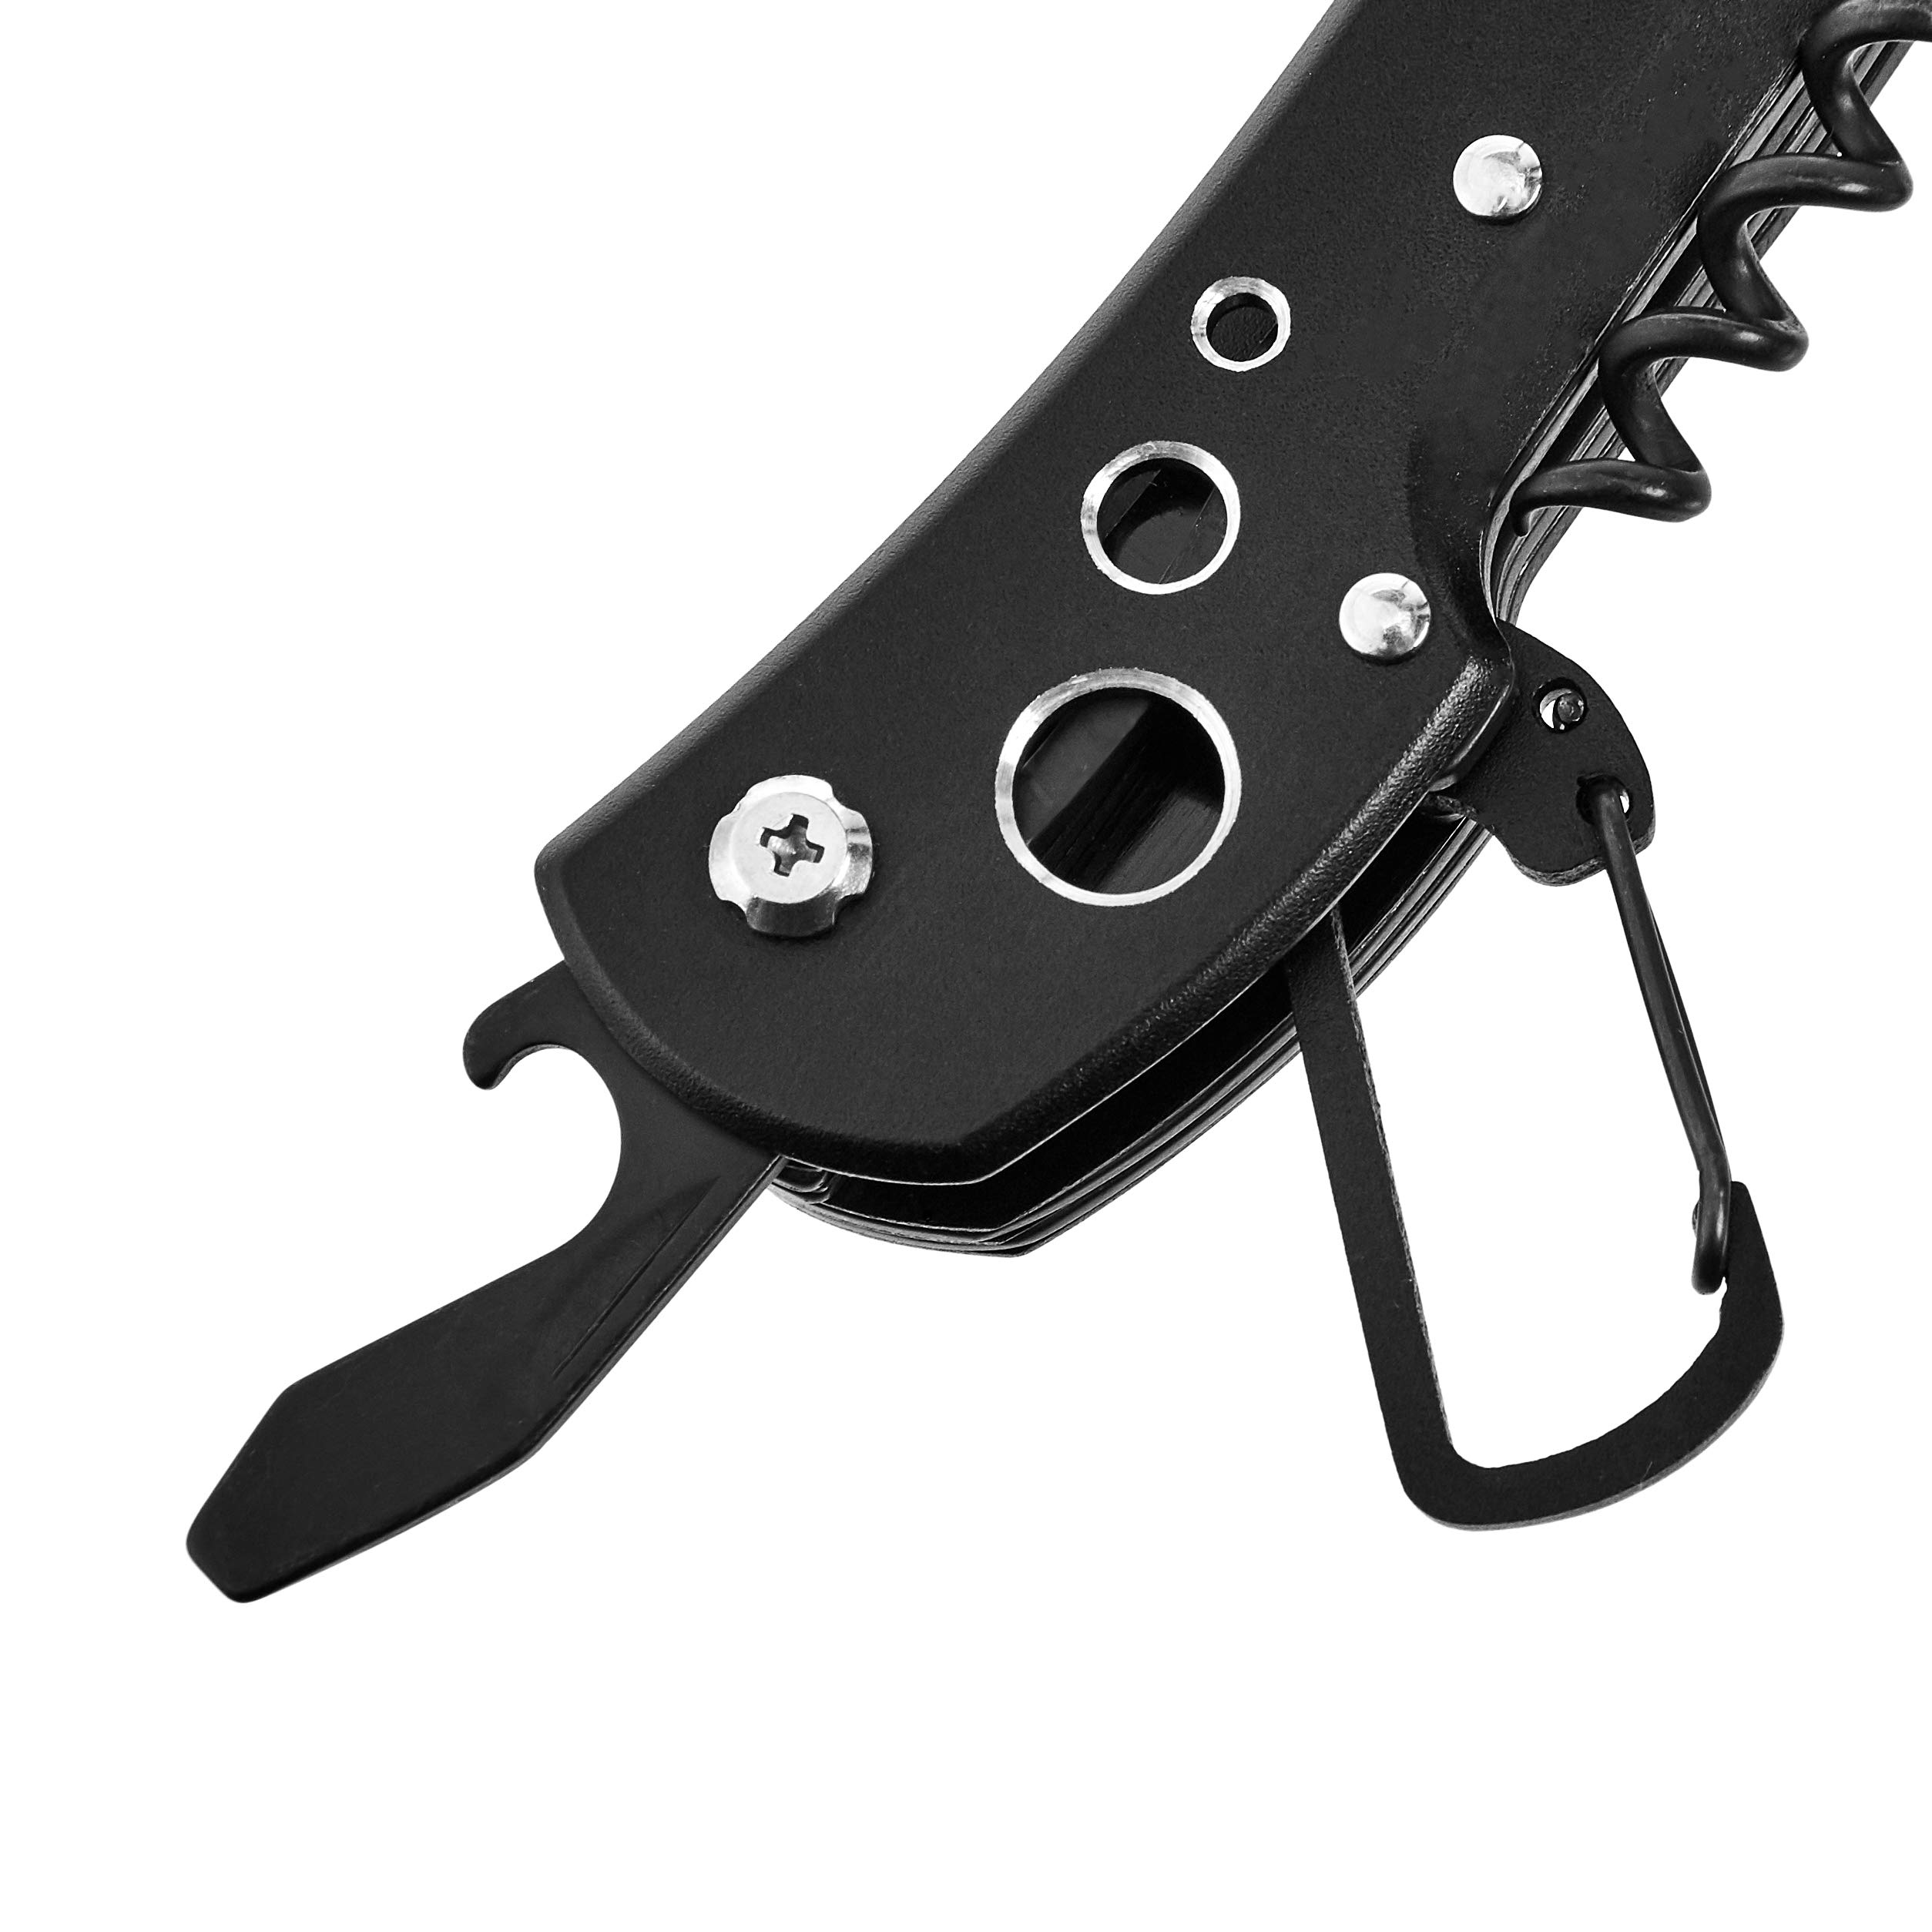 Amazon Basics 15-in-1 Stainless Steel Multitool Pocket Knife with Sheath, Black